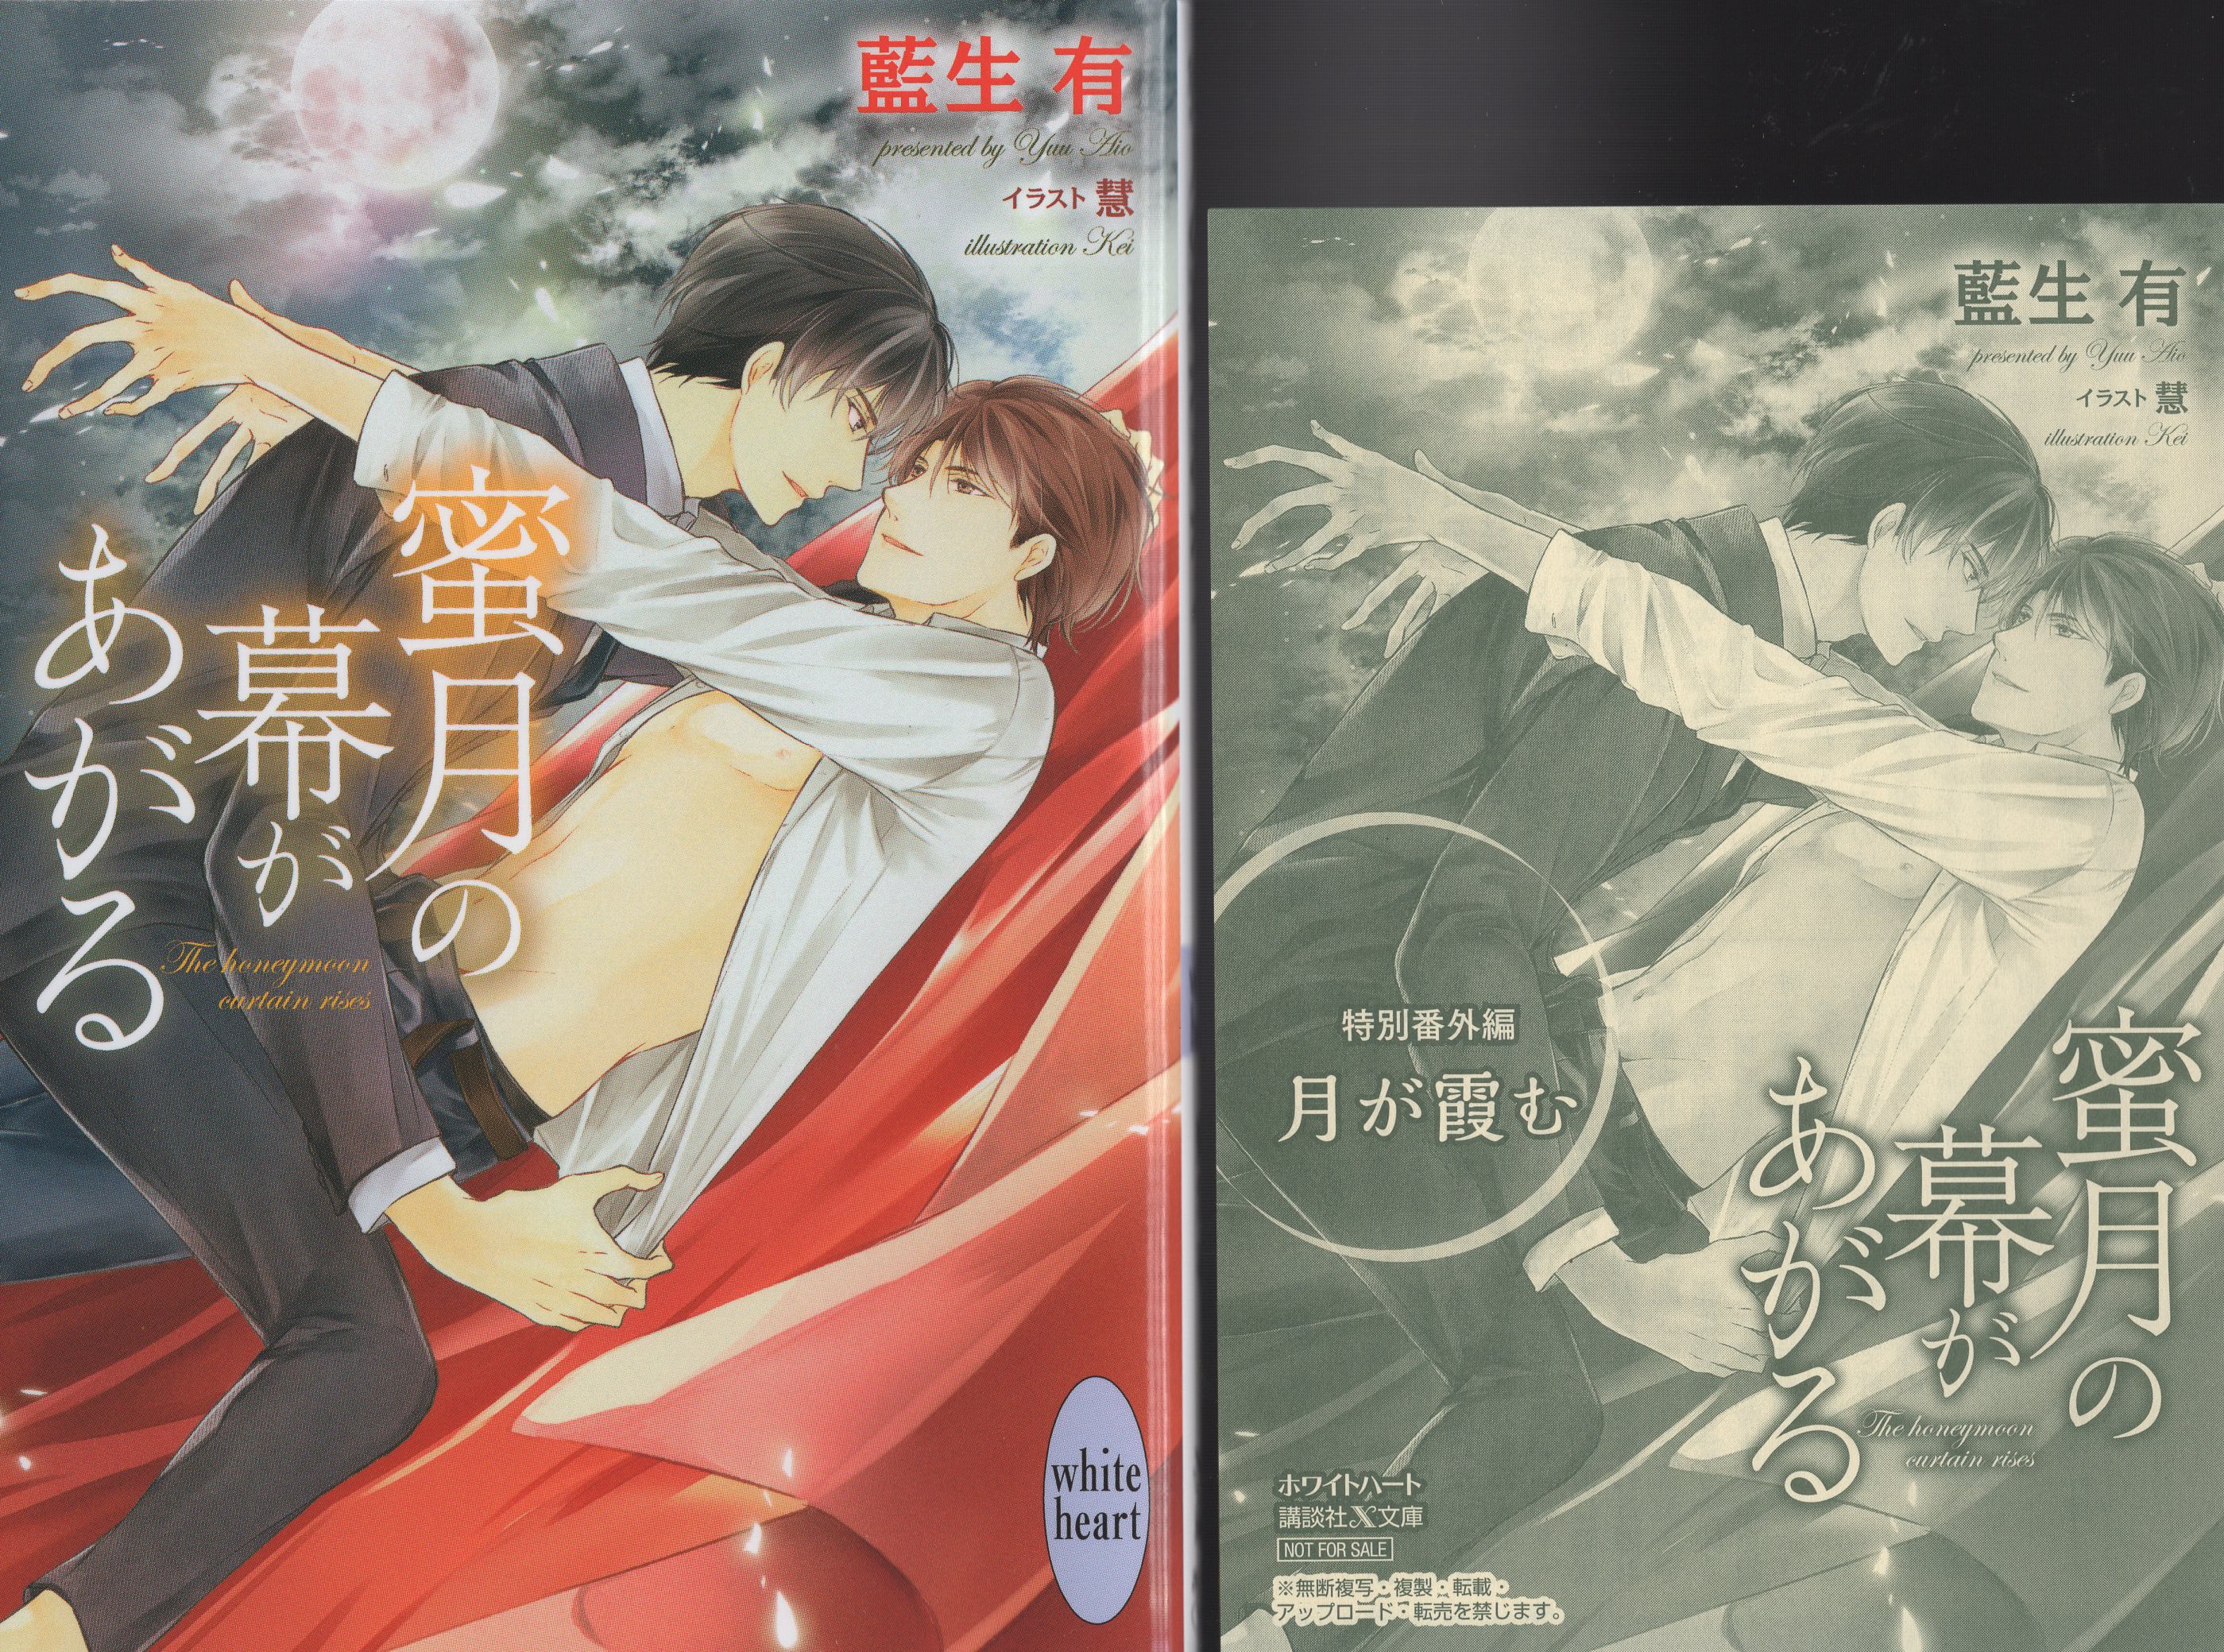 Kodansha White Heart Yuu Aio Honeymoon Curtain Rises Of First Edition With Ss Mandarake Online Shop